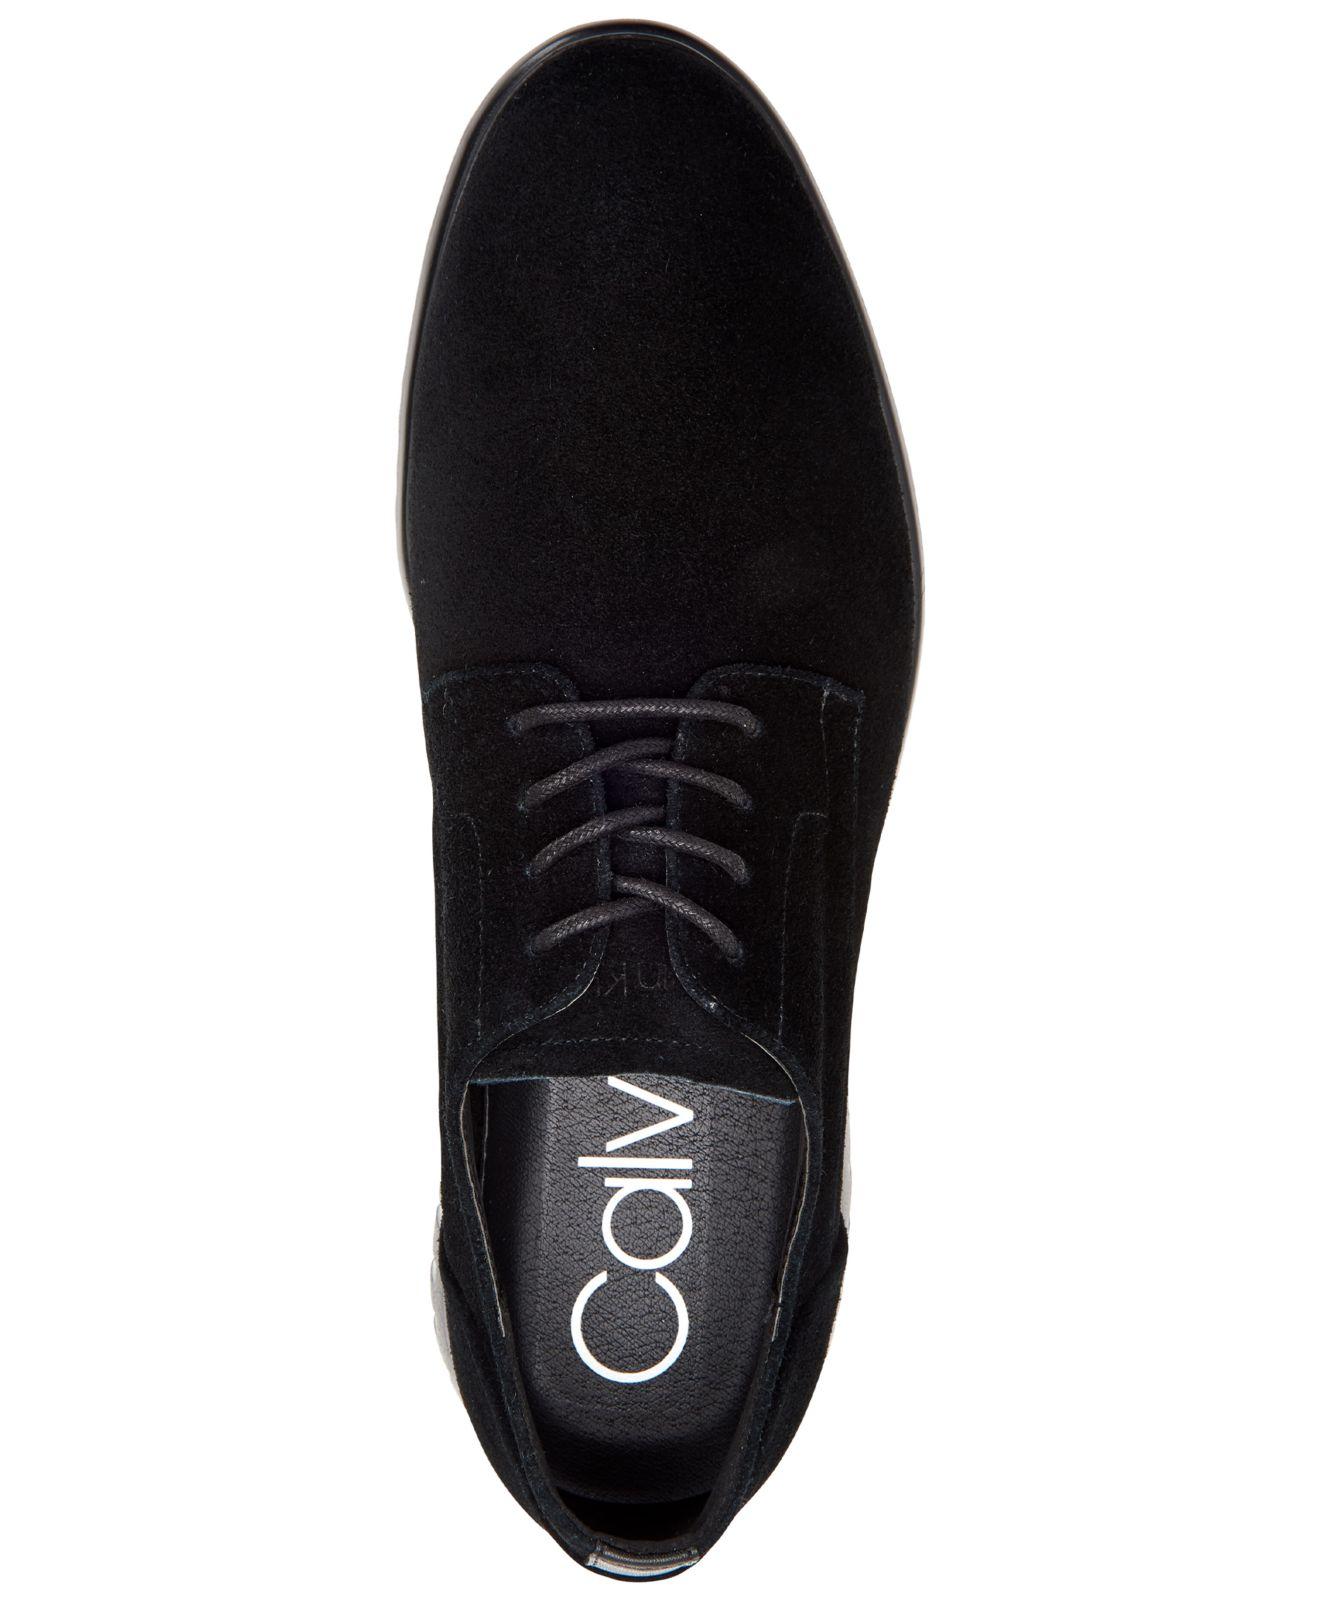 Calvin Klein Suede Teodor Dress Casual Oxfords in Black for Men - Lyst